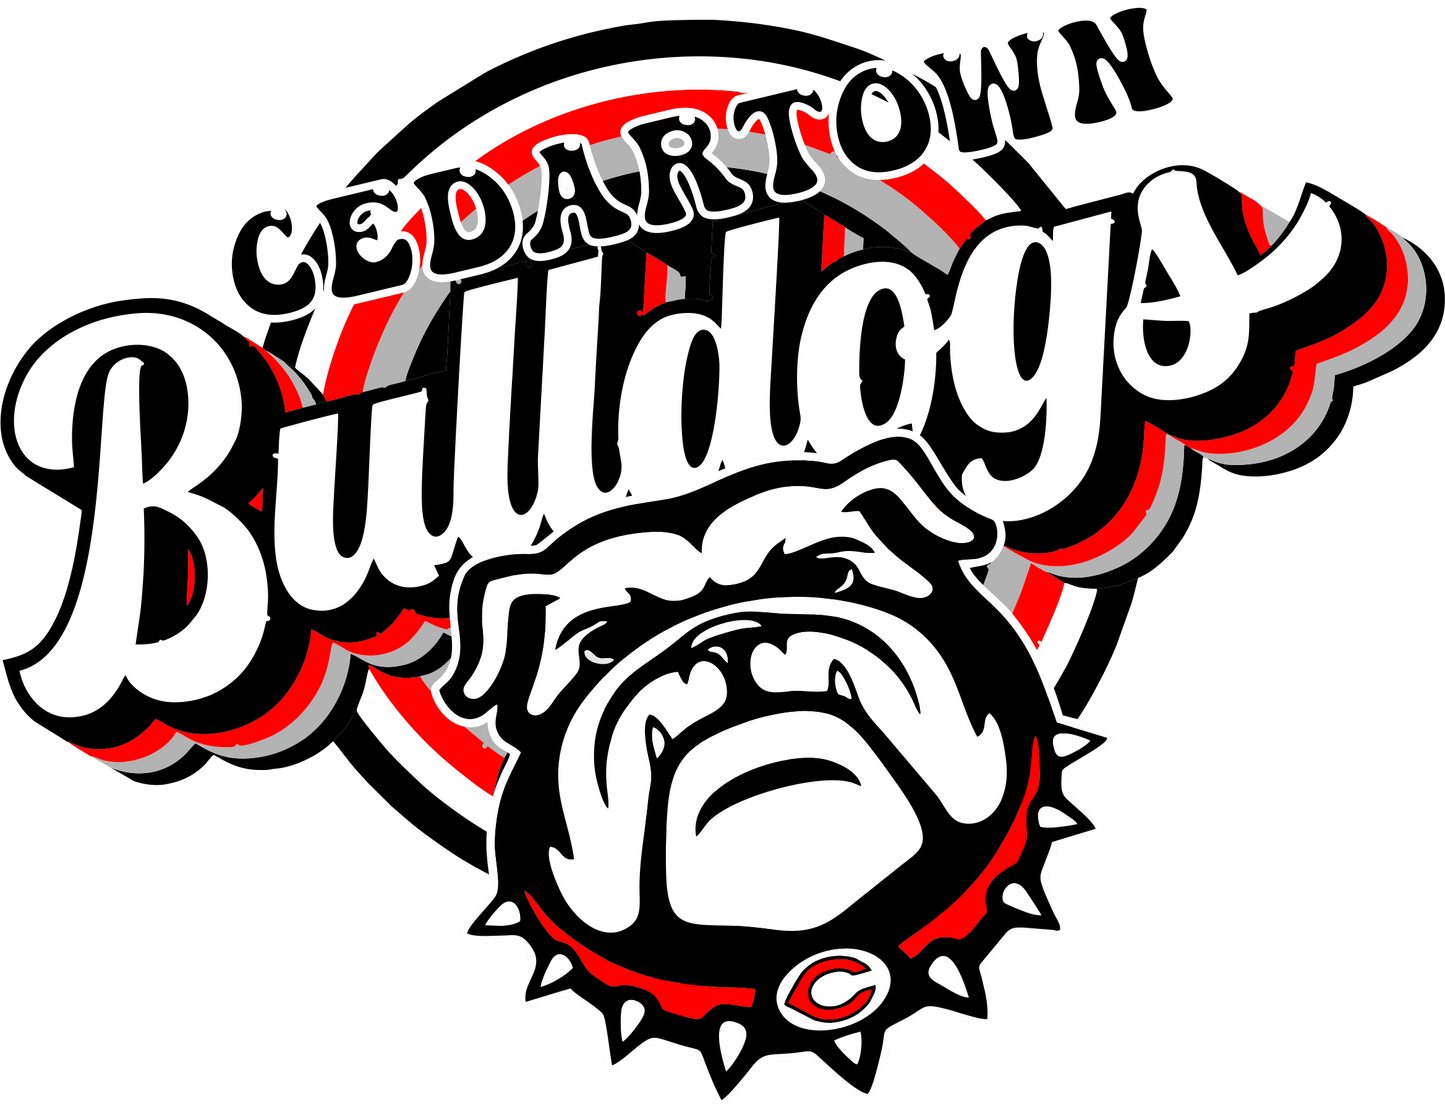 Cedartown Bulldogs Retro Design Transfer